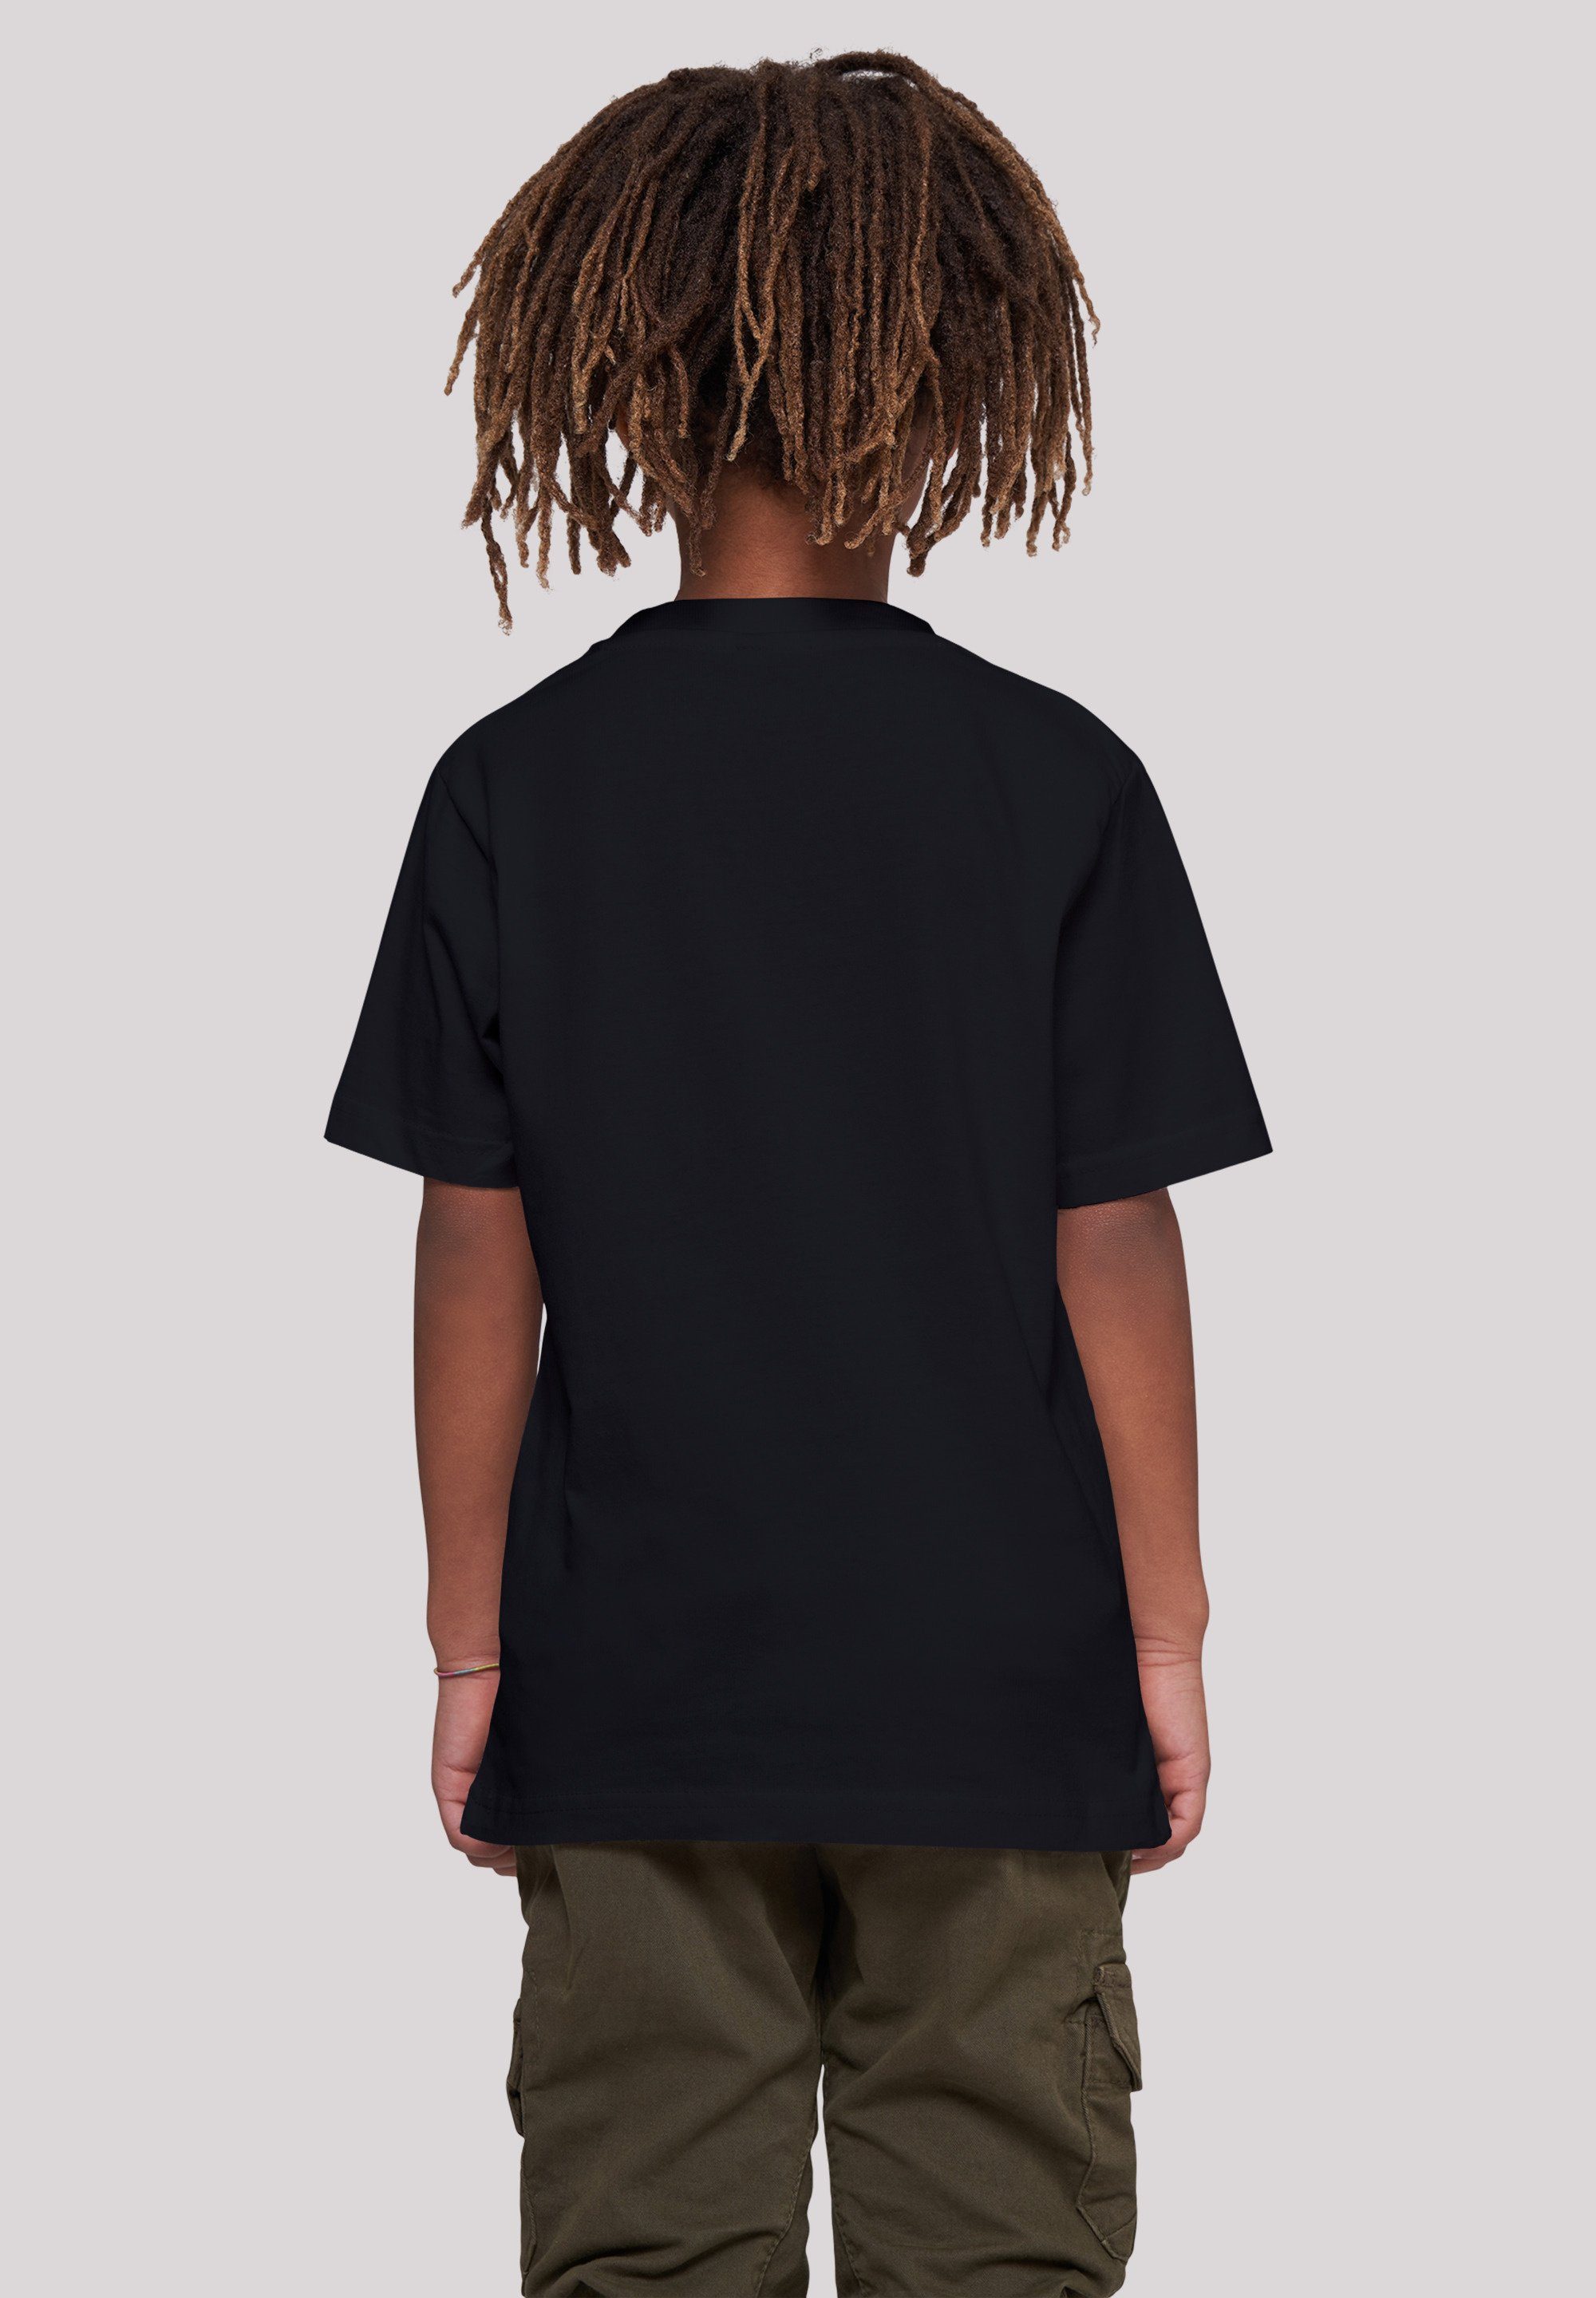 F4NT4STIC T-Shirt Schmetterling schwarz TEE UNISEX Silhouette Print